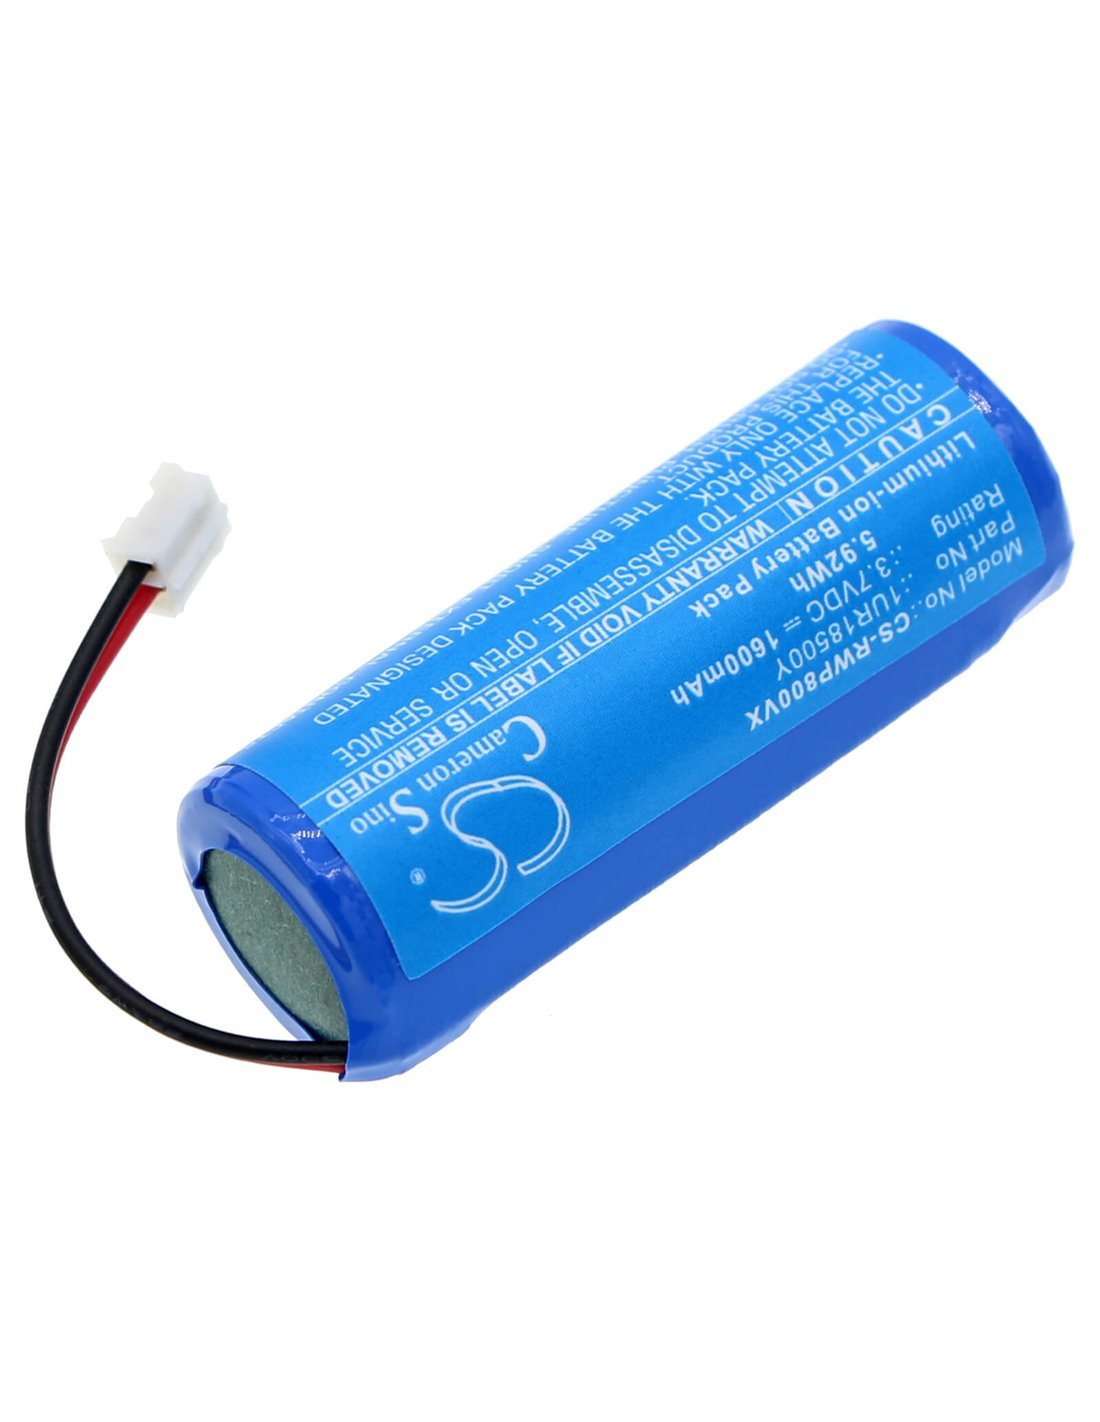 3.7V, Li-ion, 1600mAh, Battery fits Rowenta Ep8002, Ep8002c0/23 Wet & Dry Hair Rem, 5.92Wh